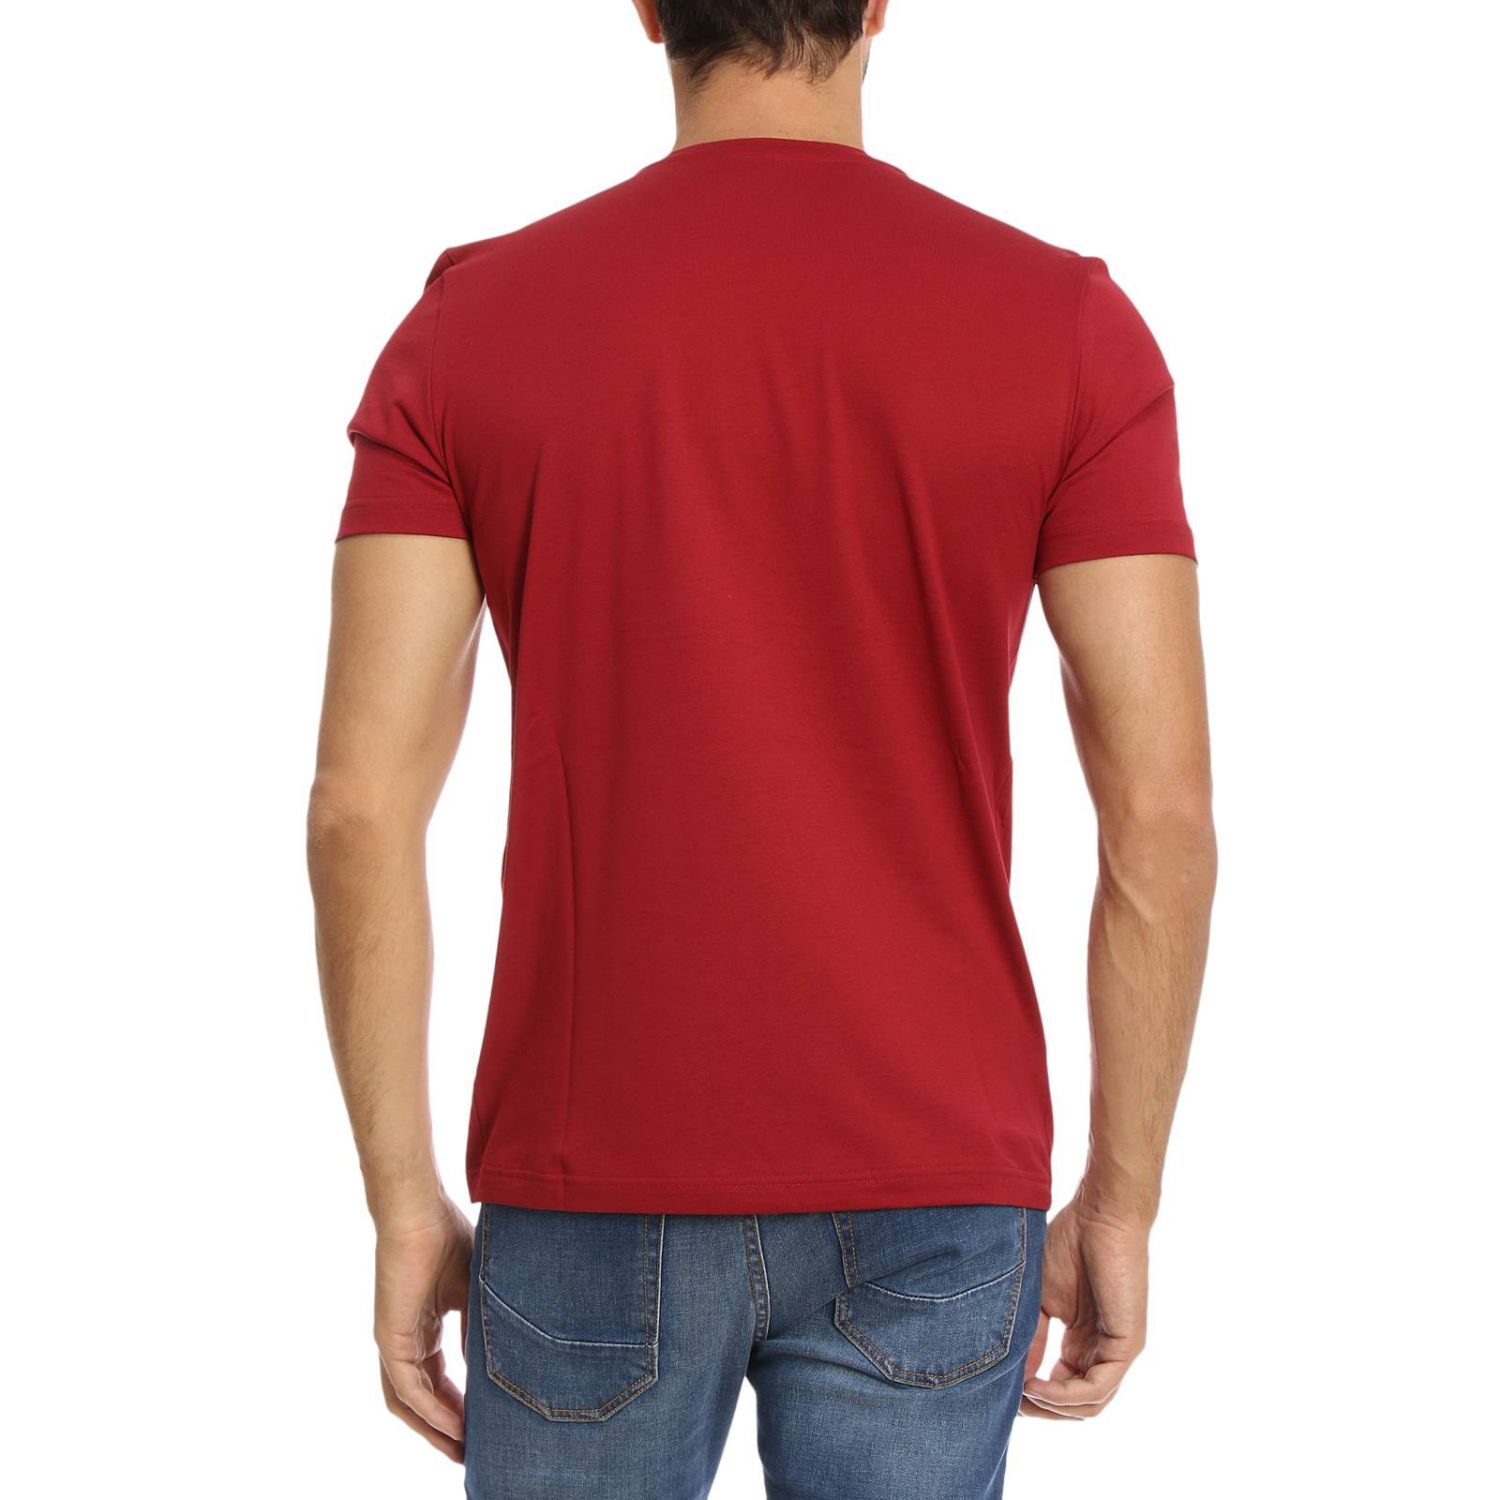 T-shirt men Fendi | T-Shirt Fendi Men Red | T-Shirt Fendi FAF532 A54P ...